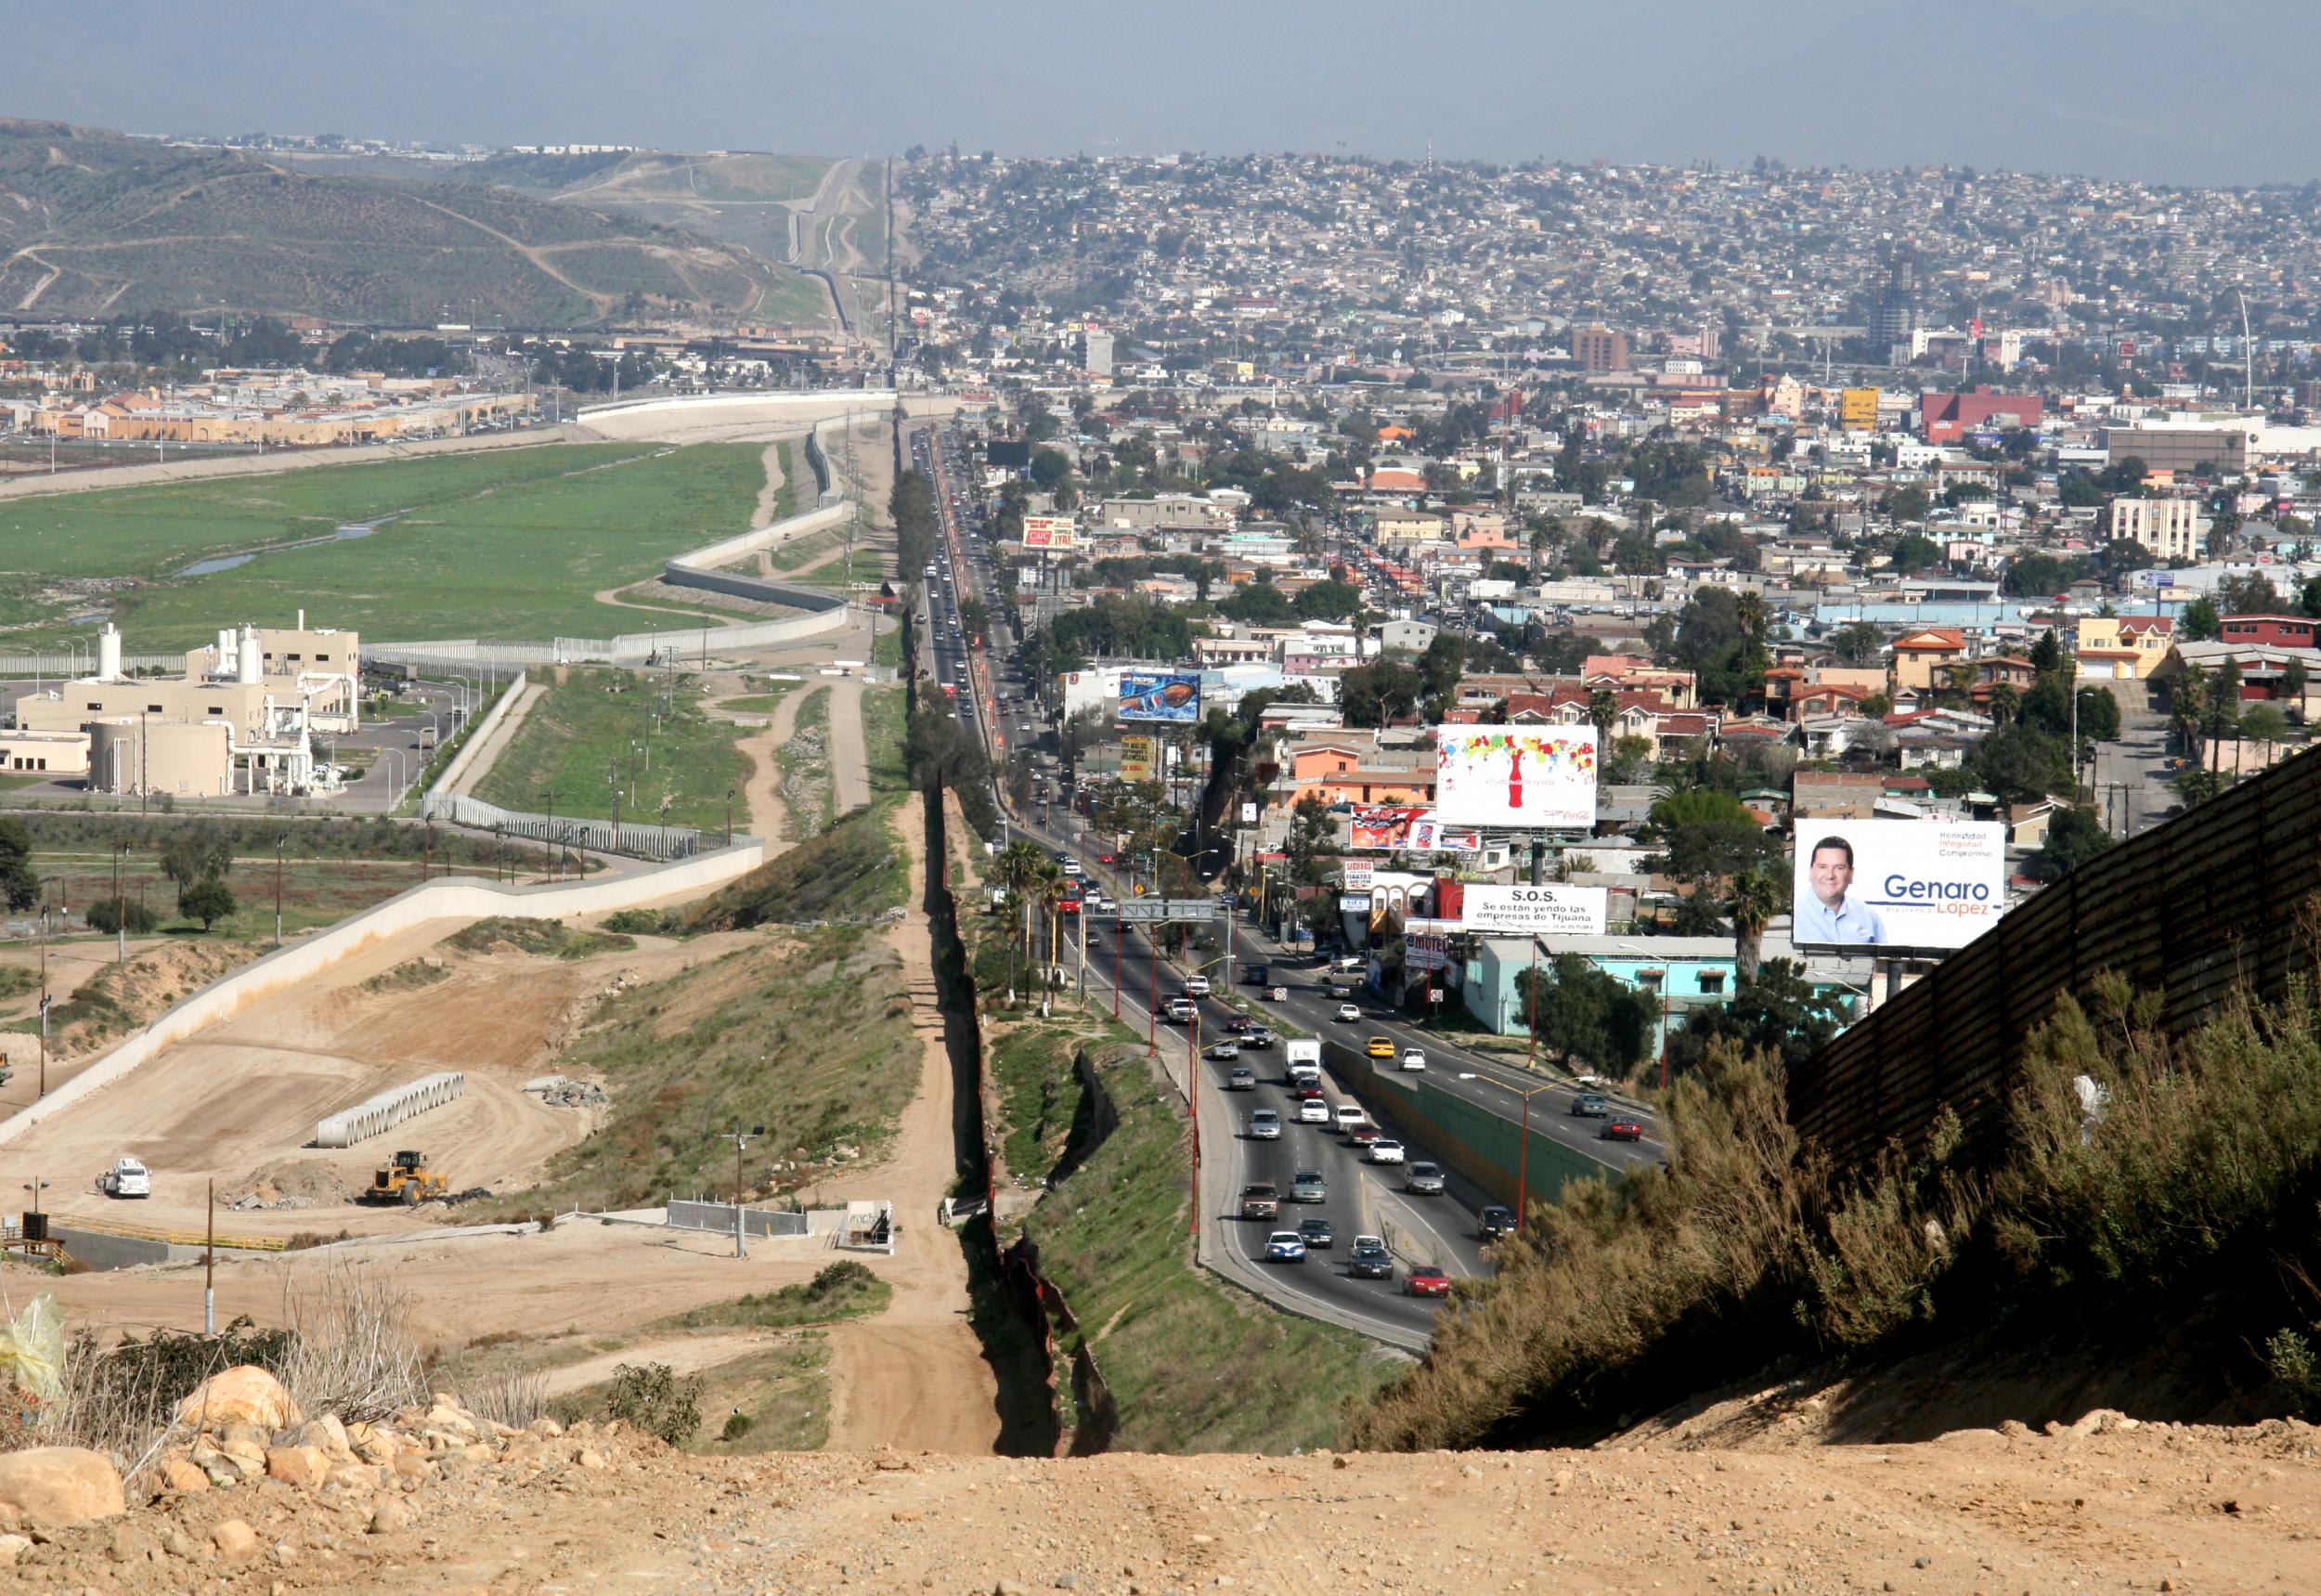 The Tijuana/US border